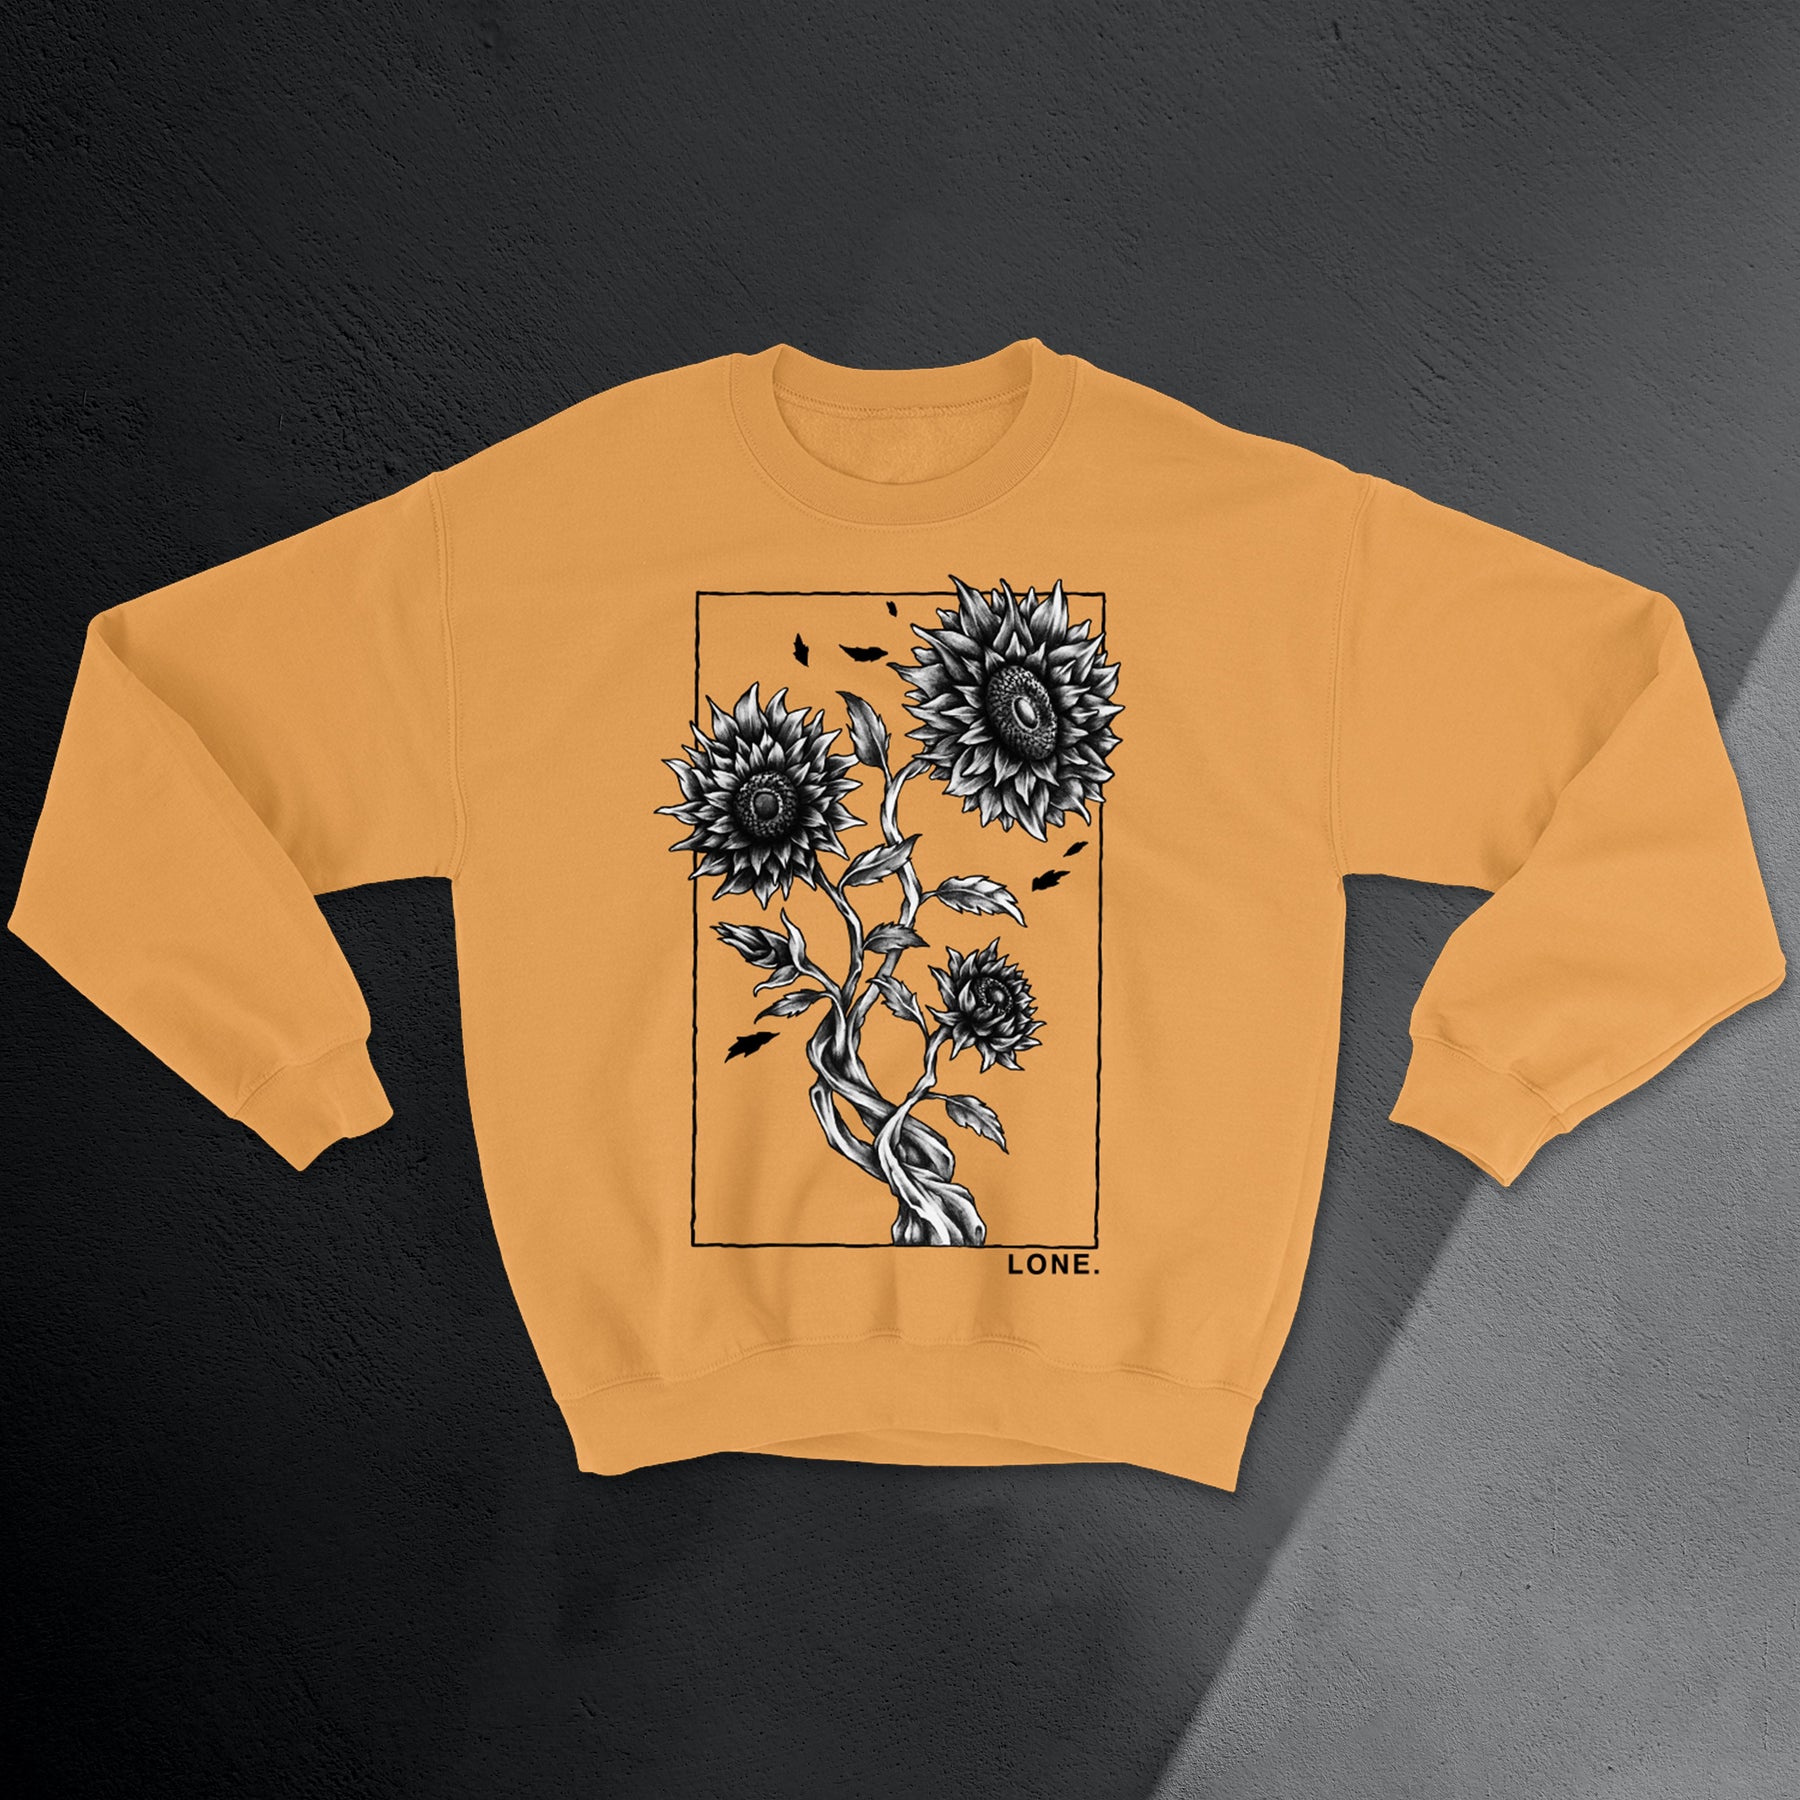 Gildan Heavy Blend Sweatshirts - Your Design - Custom Printed